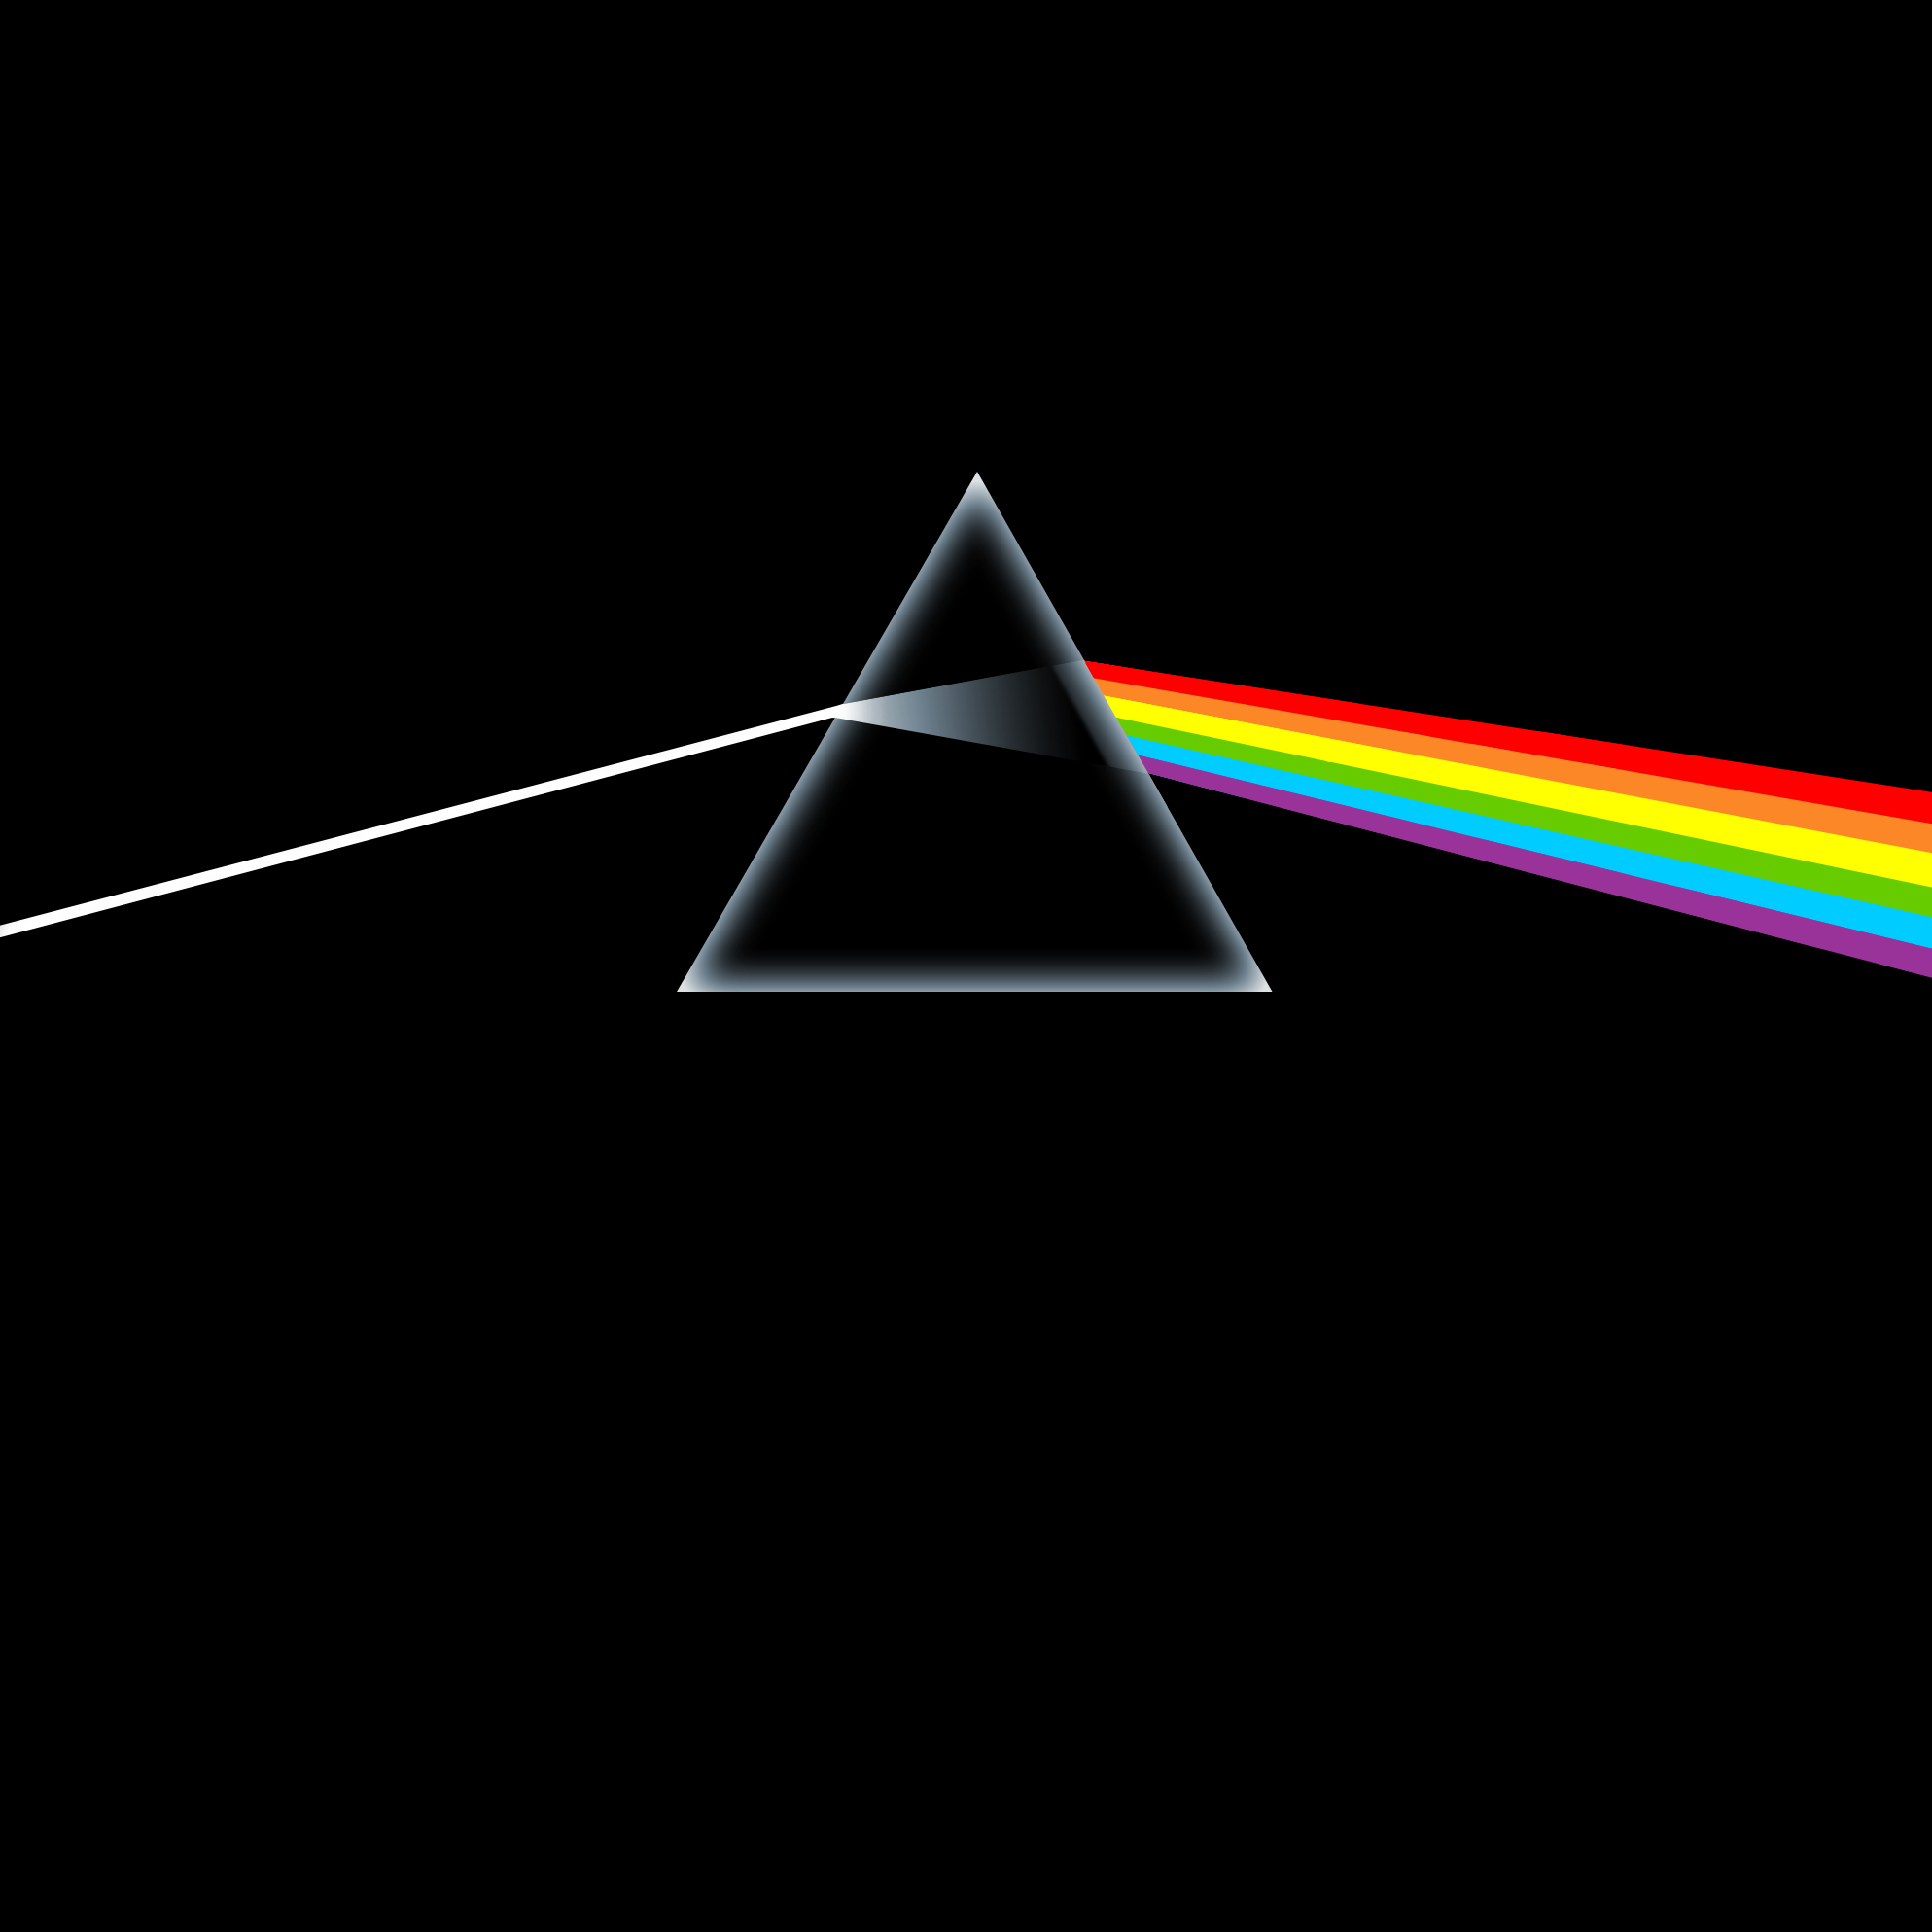 Pink Floyd - Dark Side of the Moon - album cover